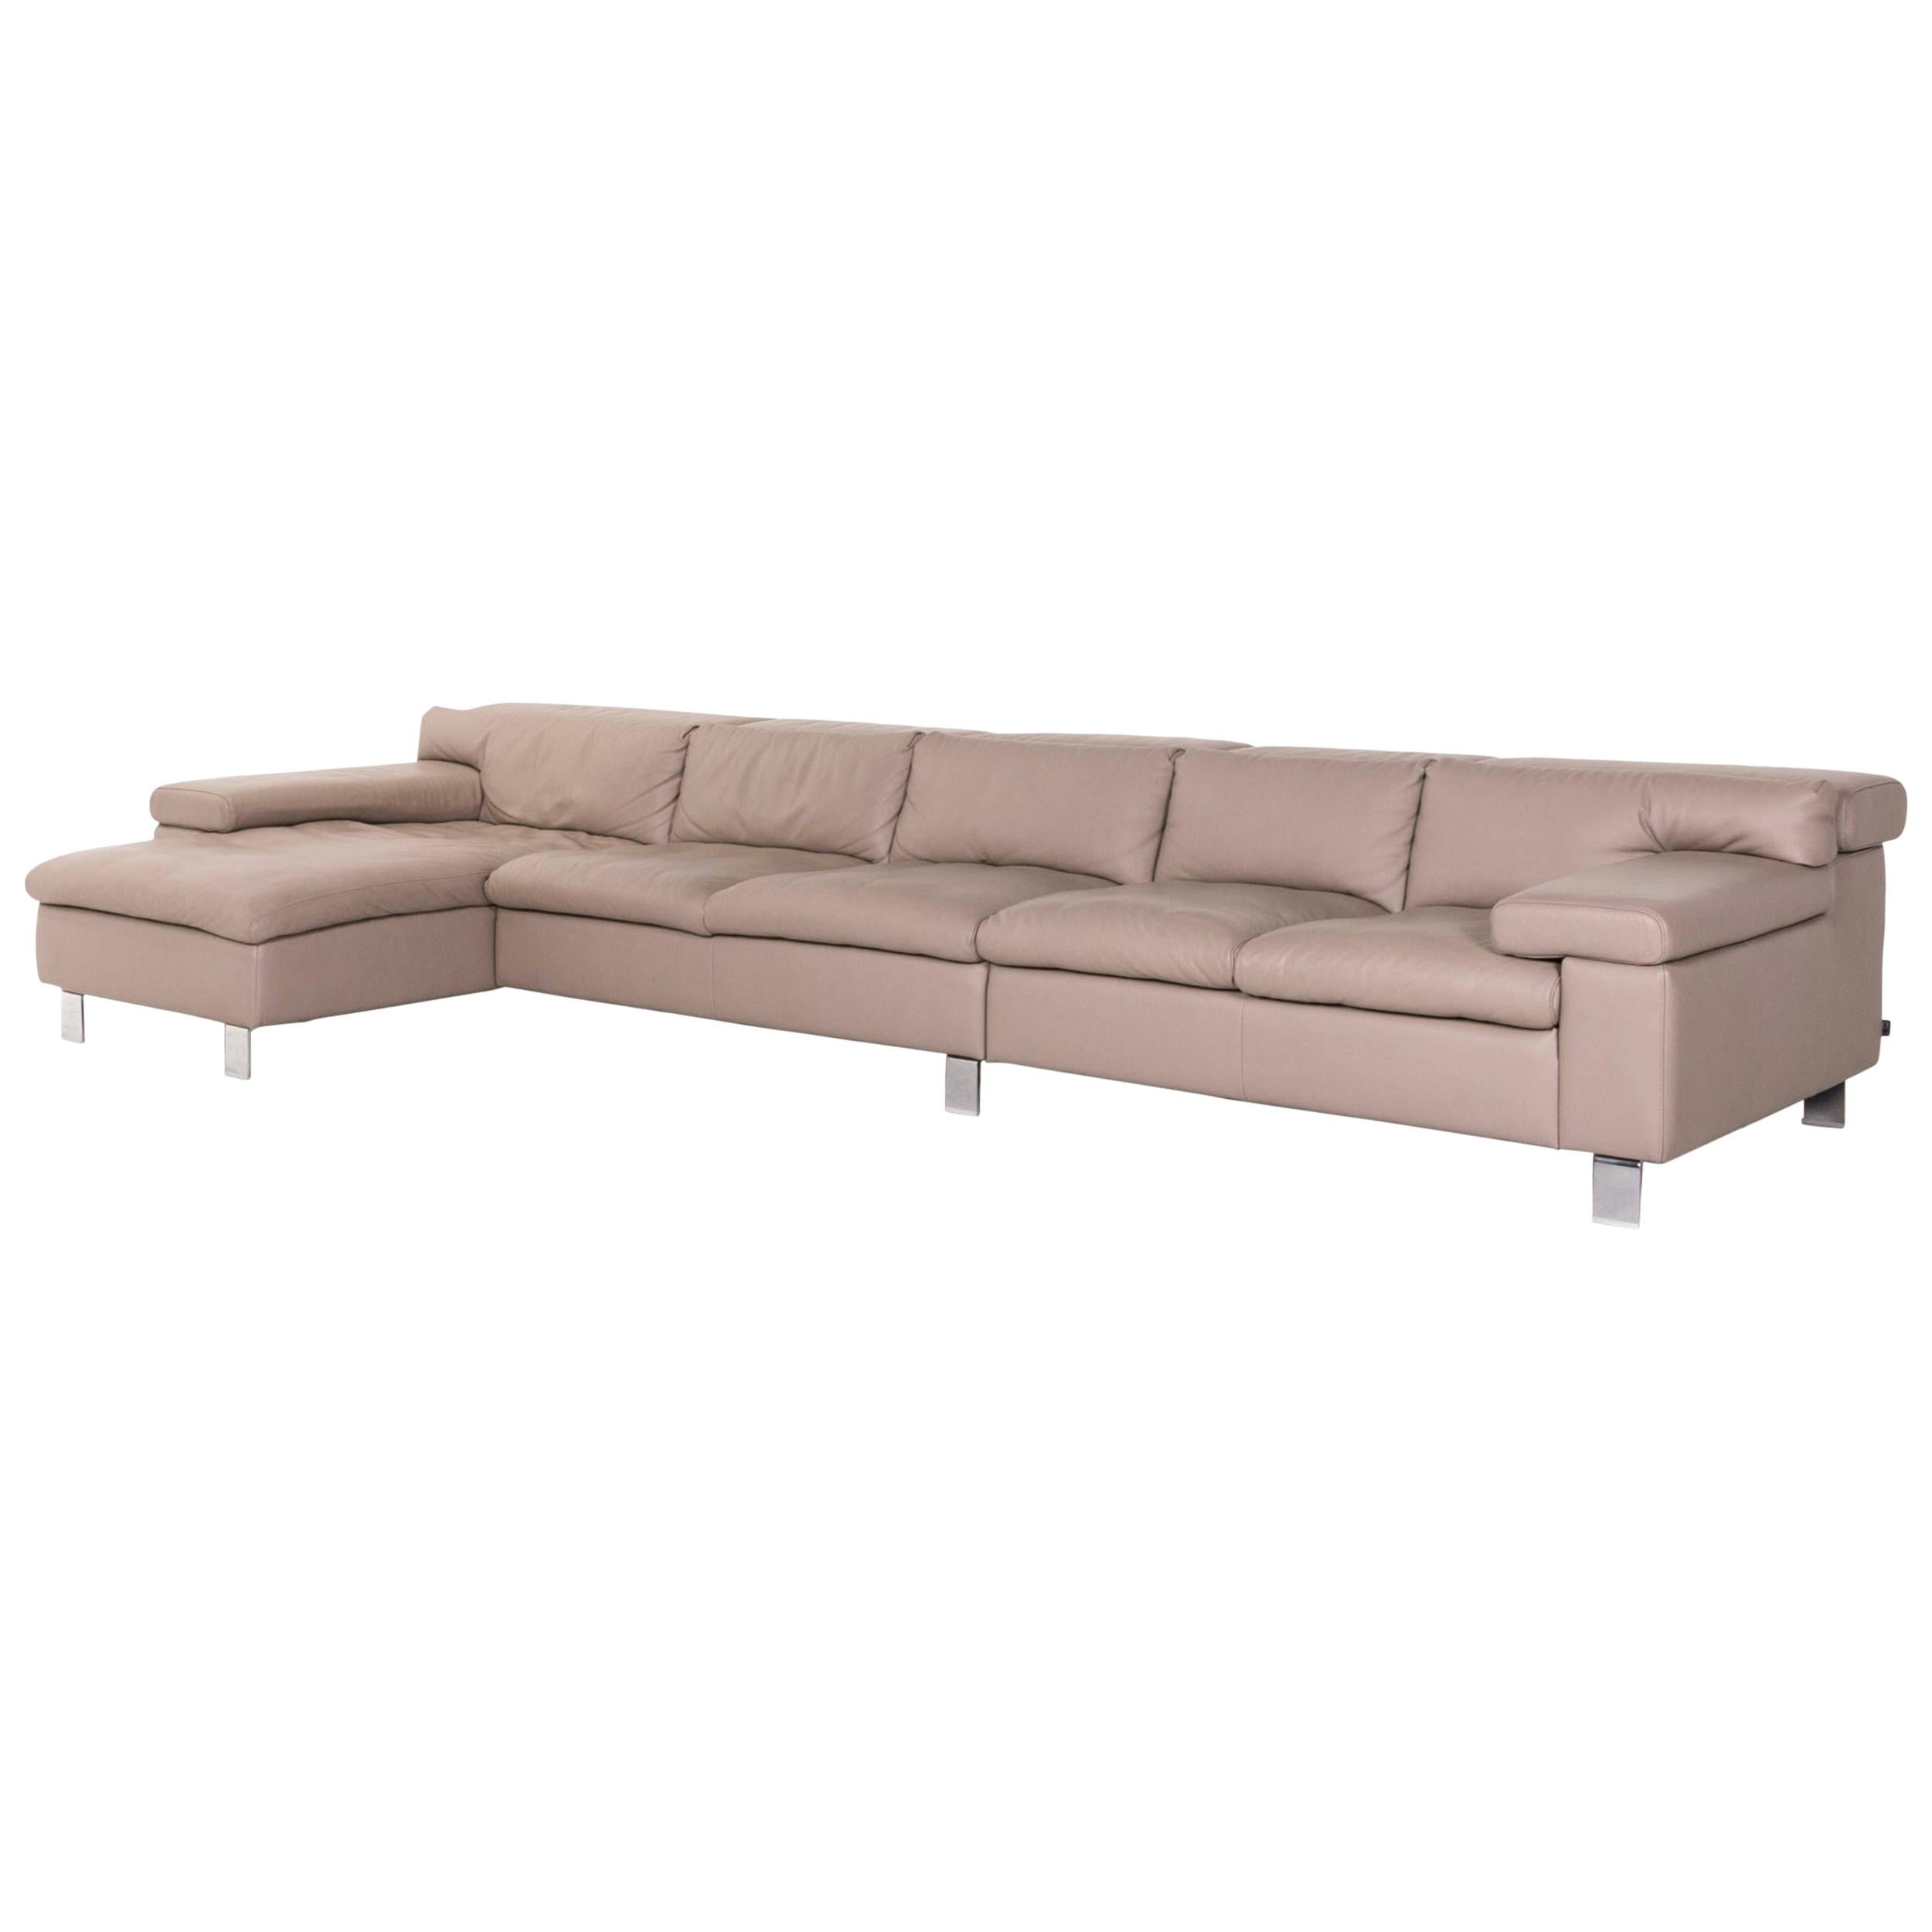 Ewald Schillig Leather Corner Sofa Brown Gray Beige Cappucino Sofa Couch For Sale